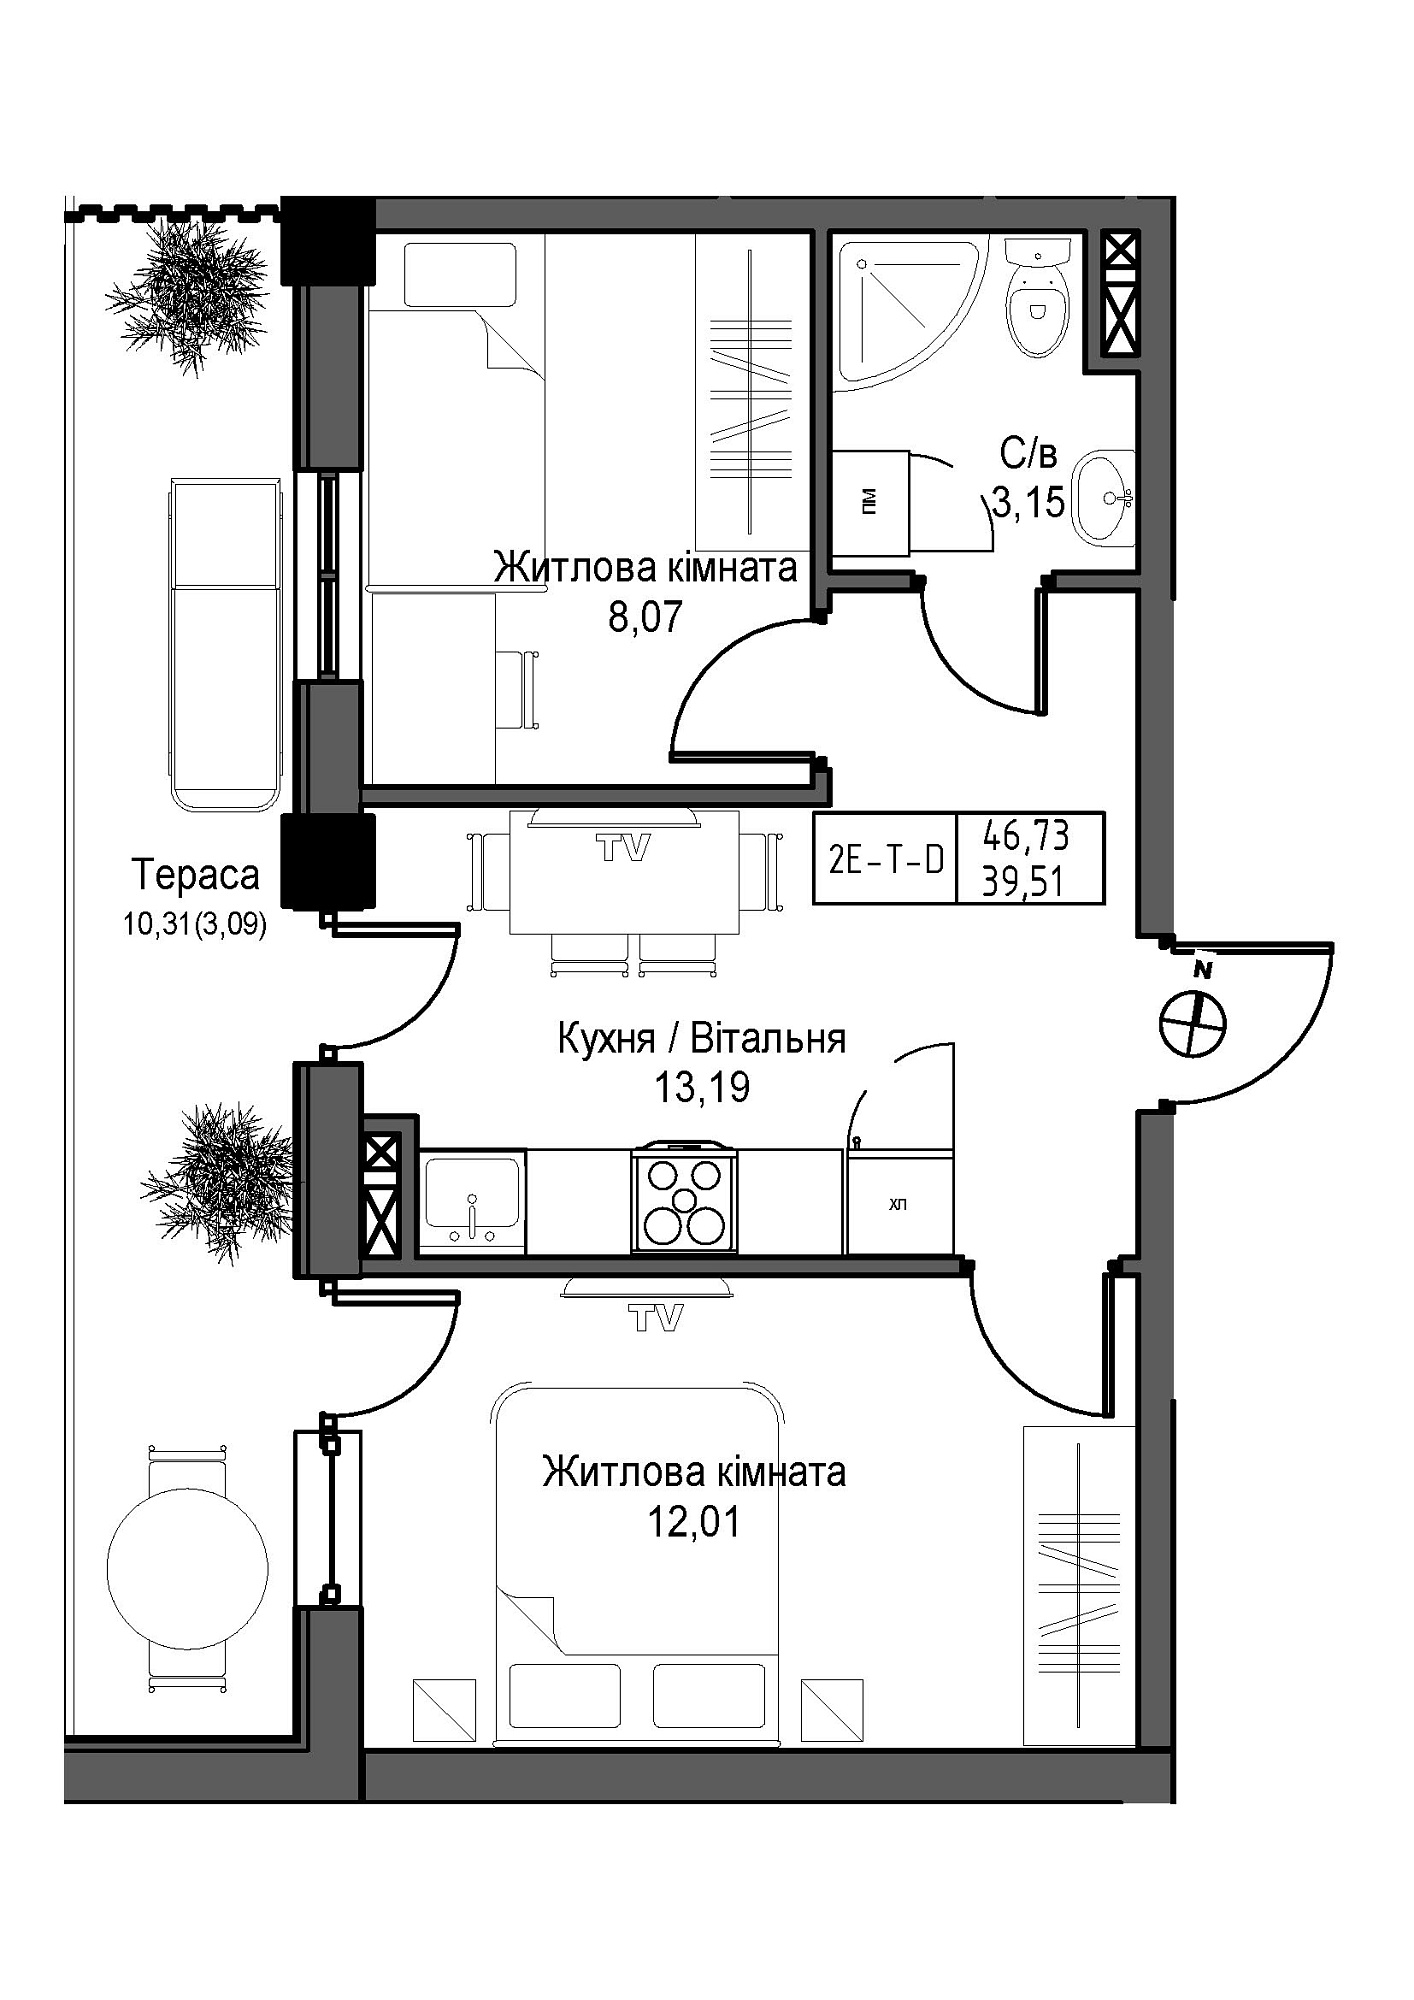 Planning 2-rm flats area 39.51m2, UM-007-08/0001.